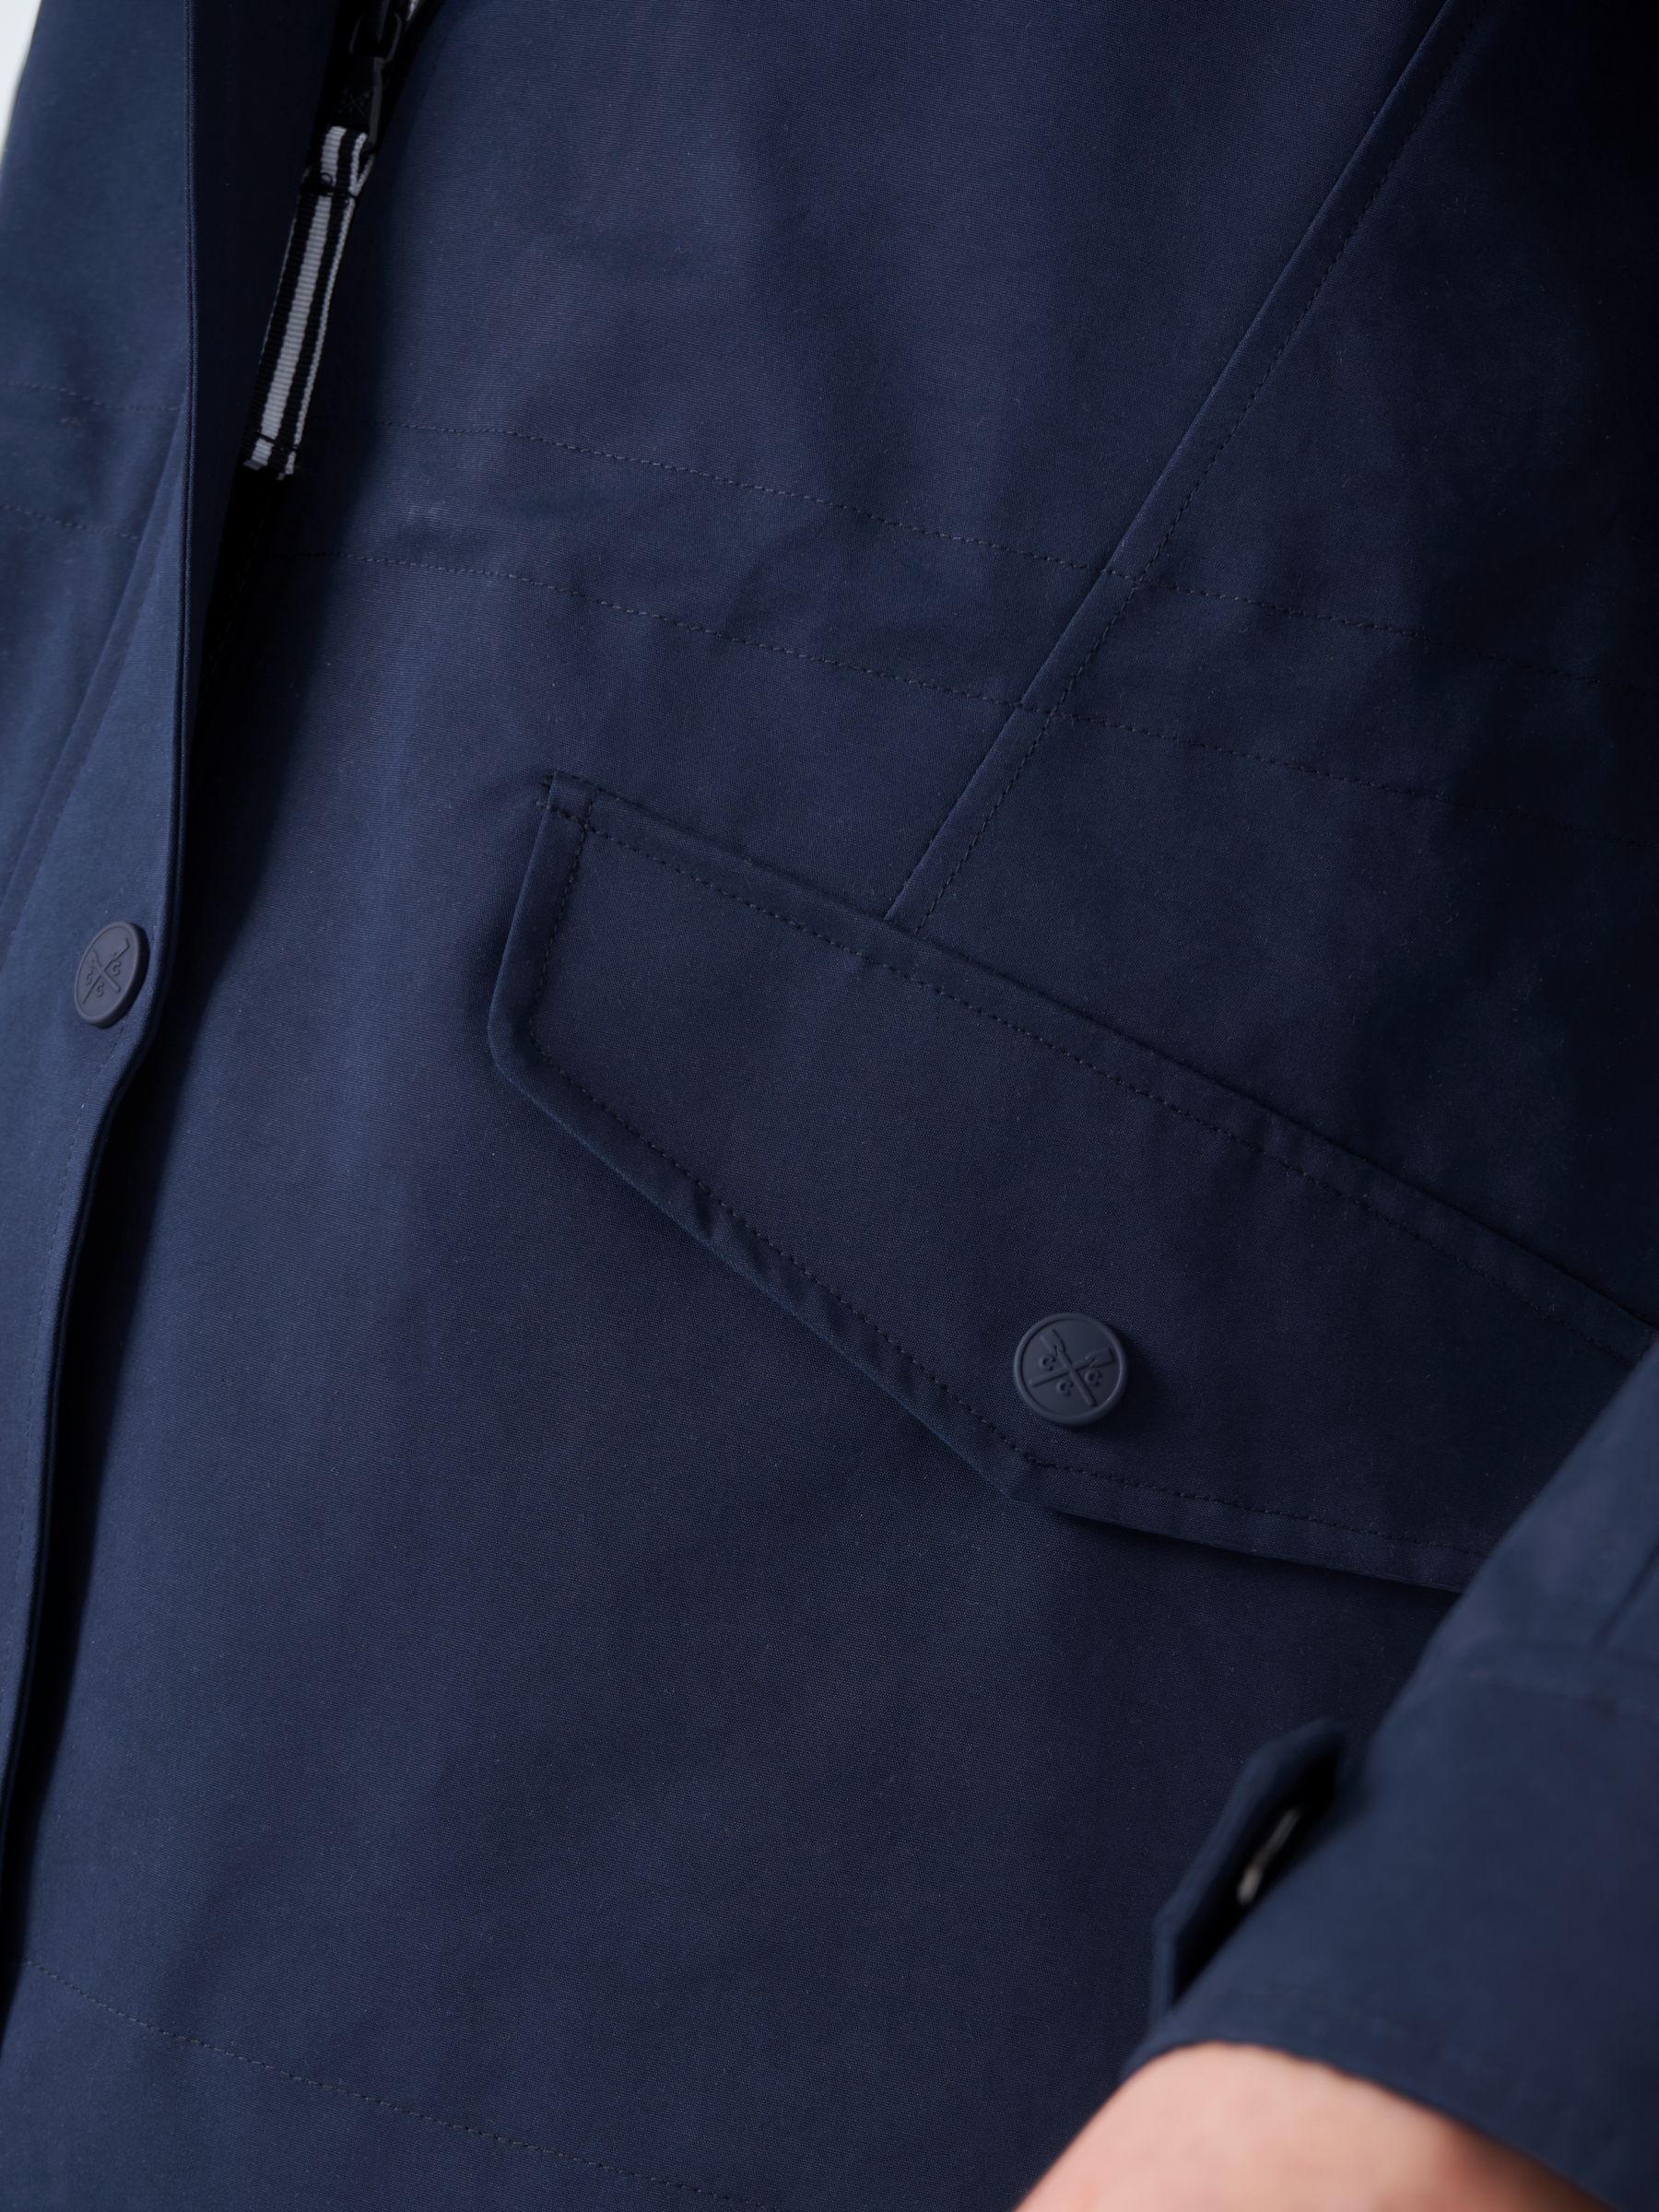 Buy Crew Clothing Rain Jacket, Navy Blue Online at johnlewis.com